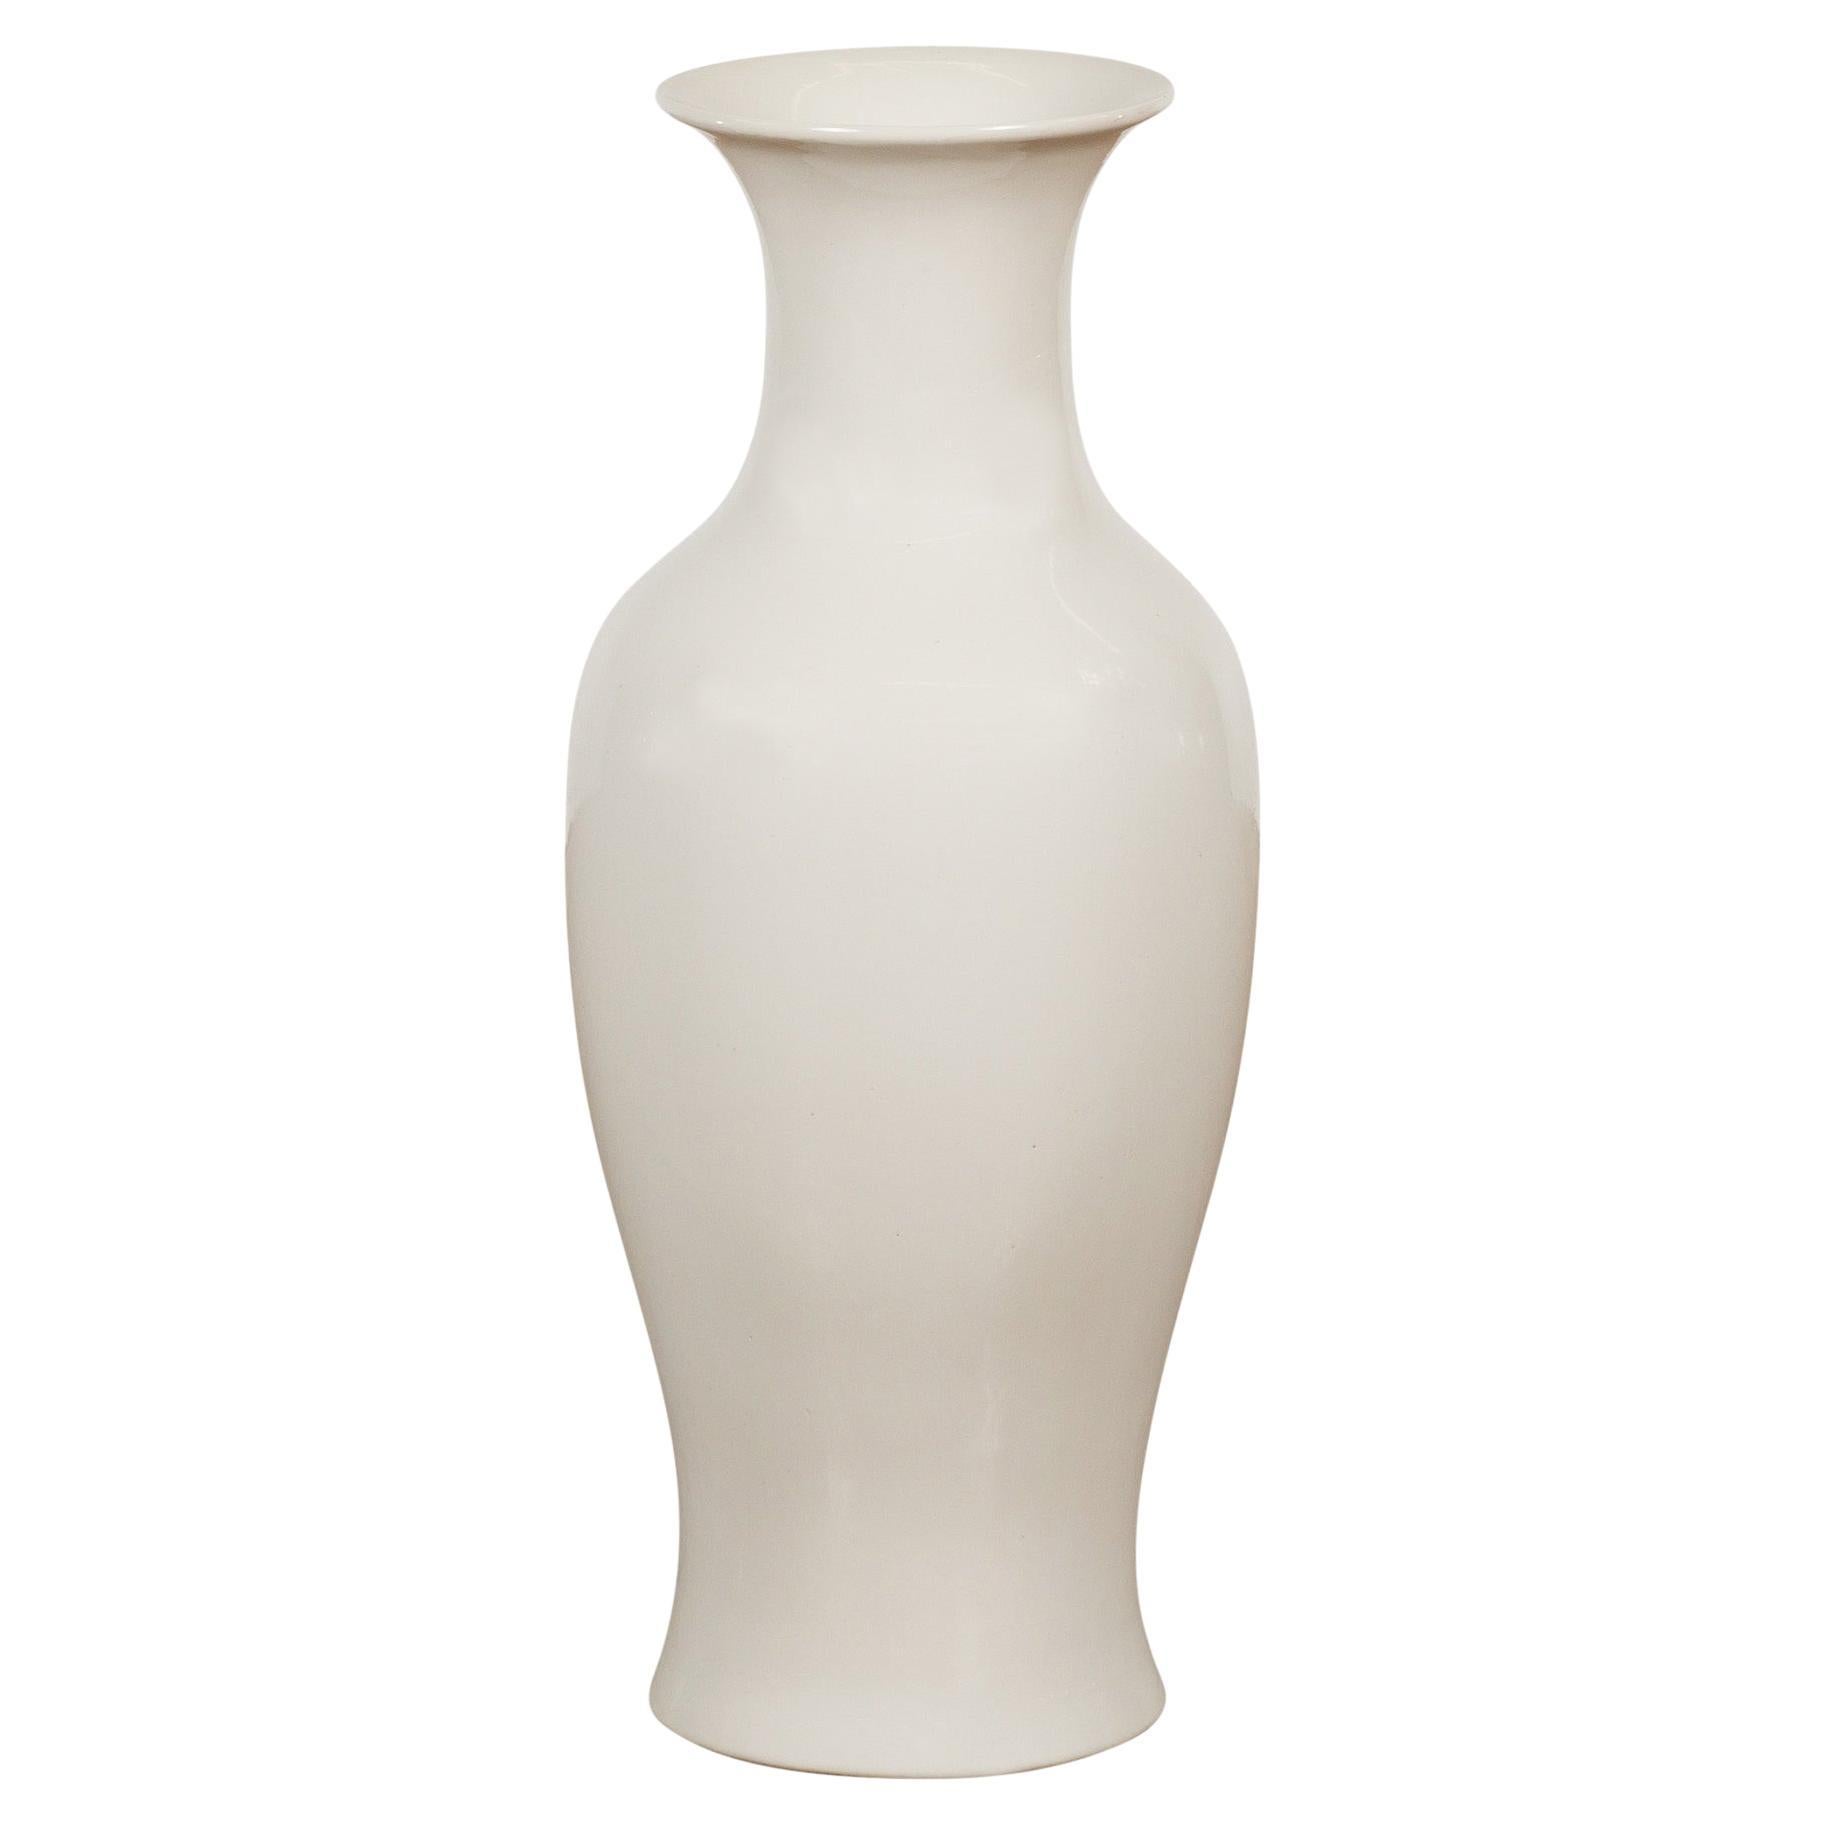 White Vintage Vase Curved Body & Flared Neck